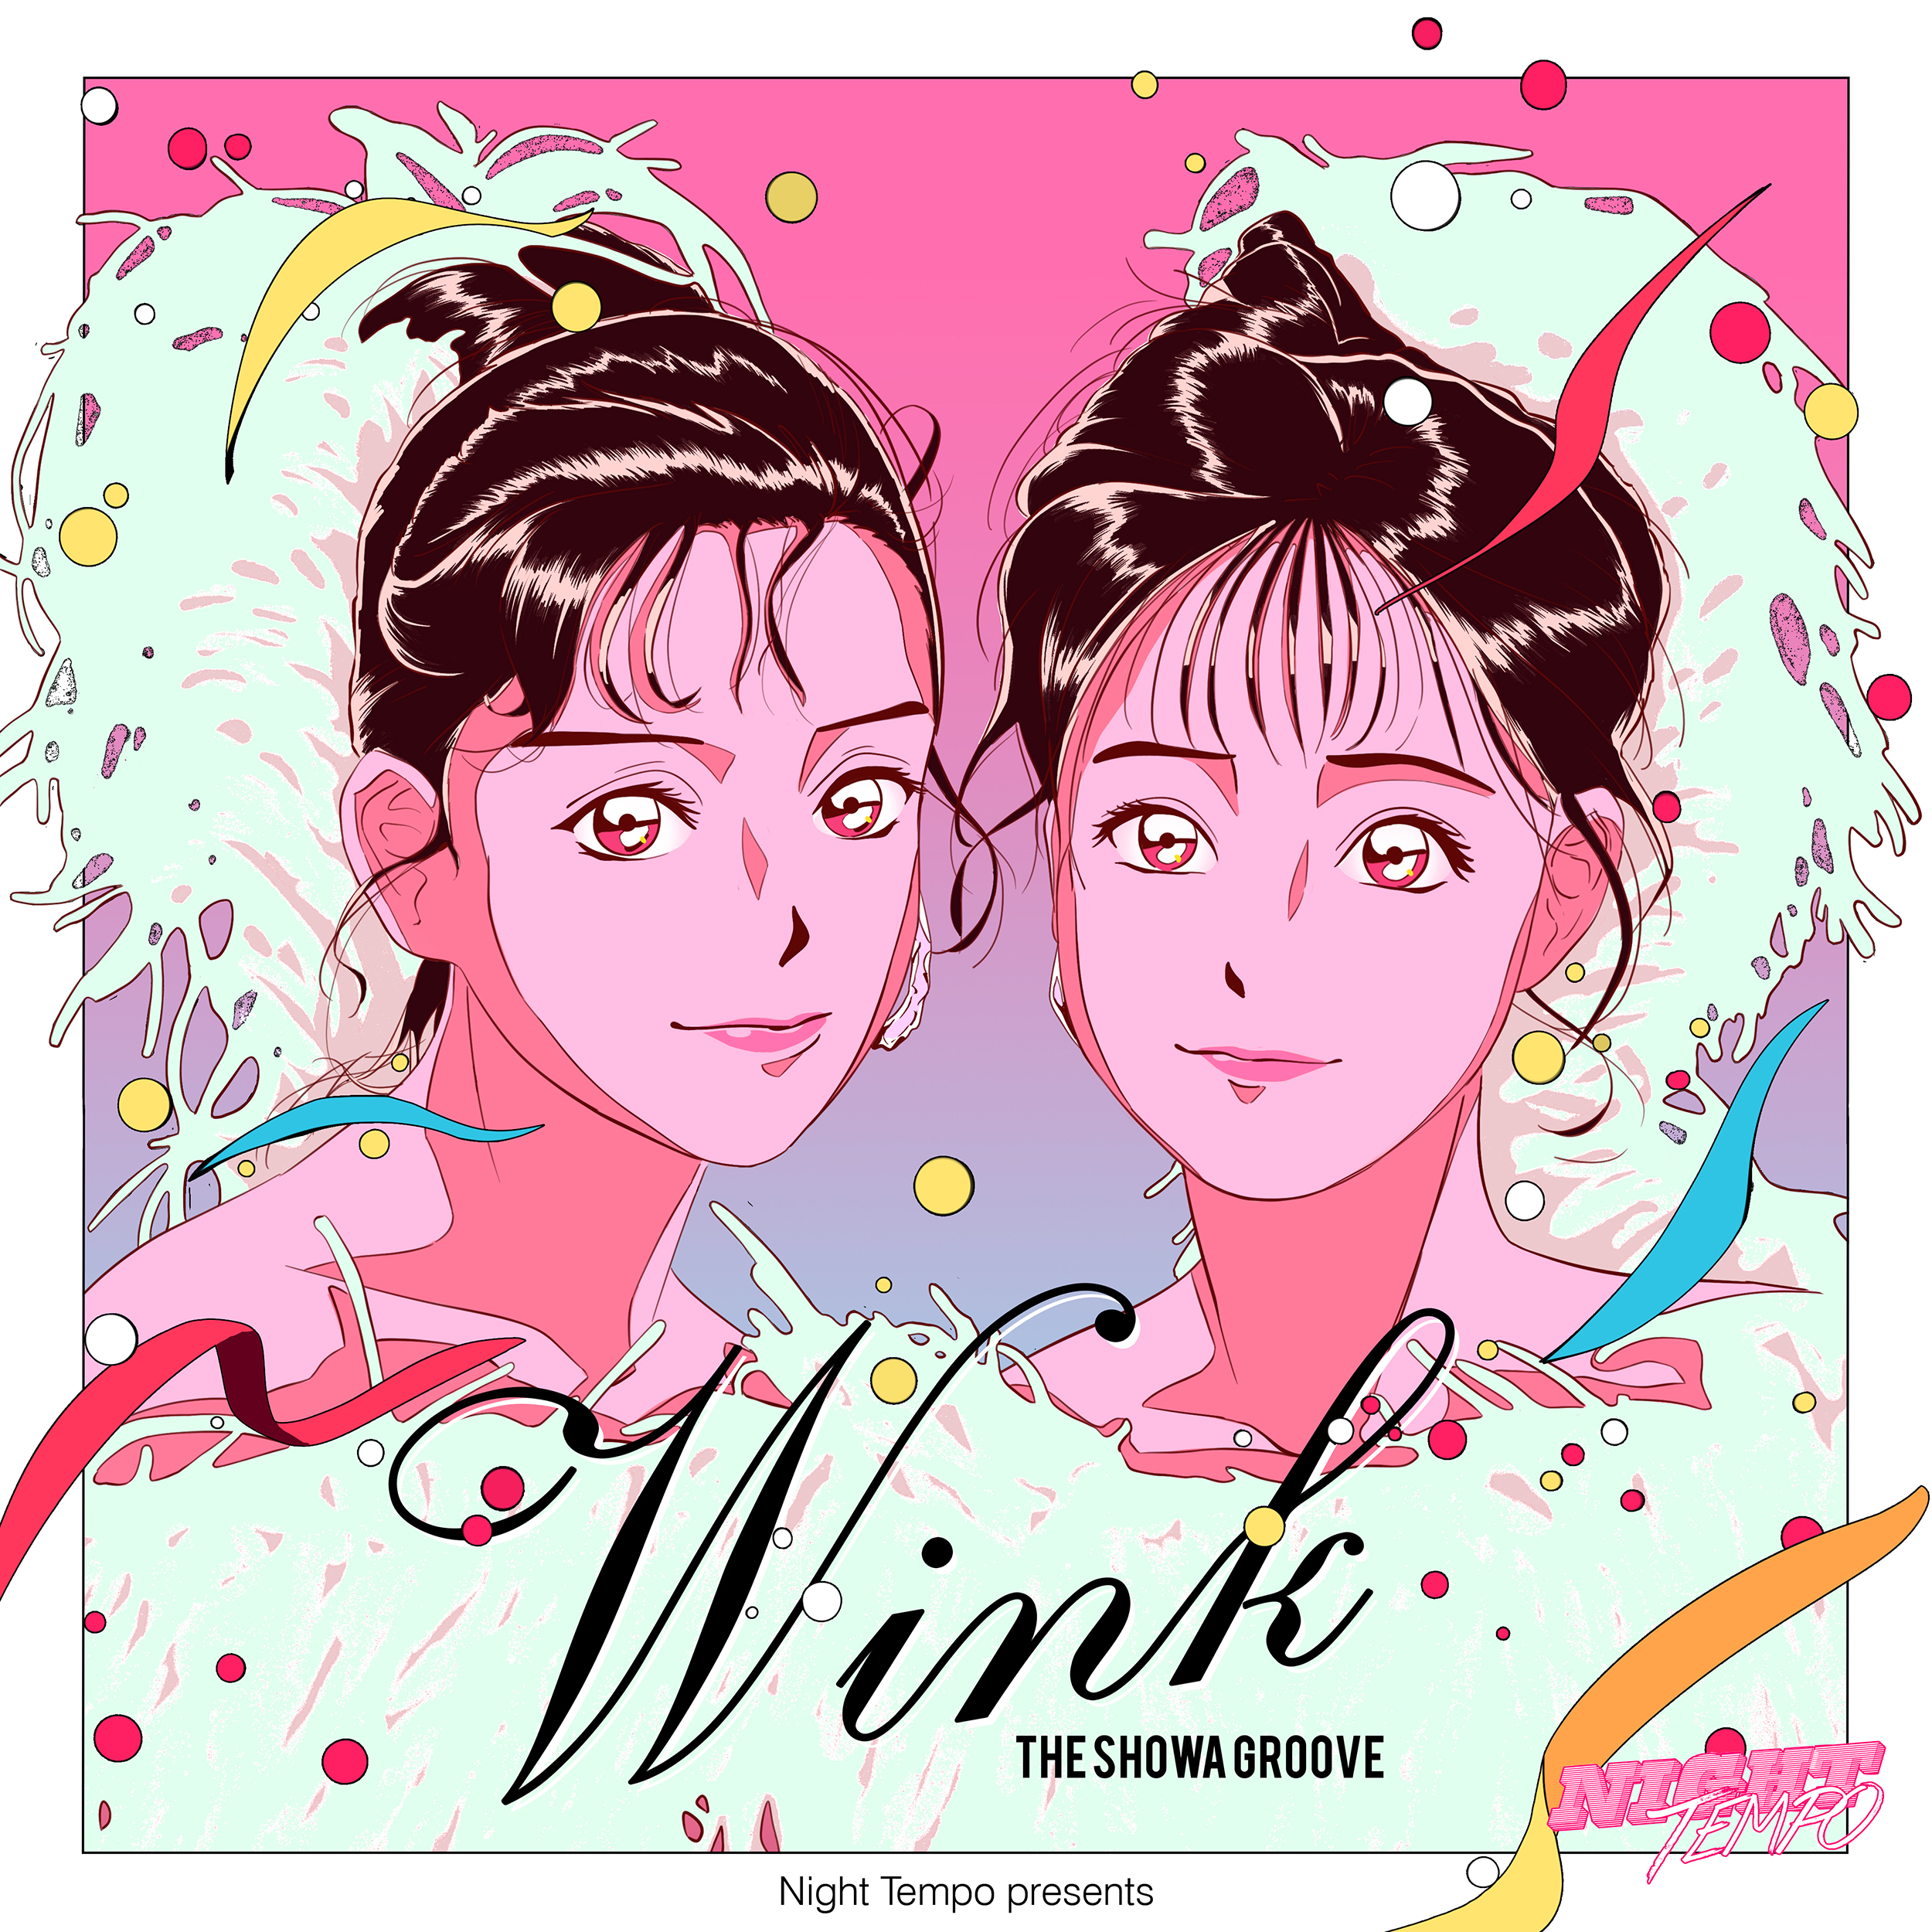 Wink_Night Tempo presents The Showa Groove _cover artwork_fina2500l.jpg